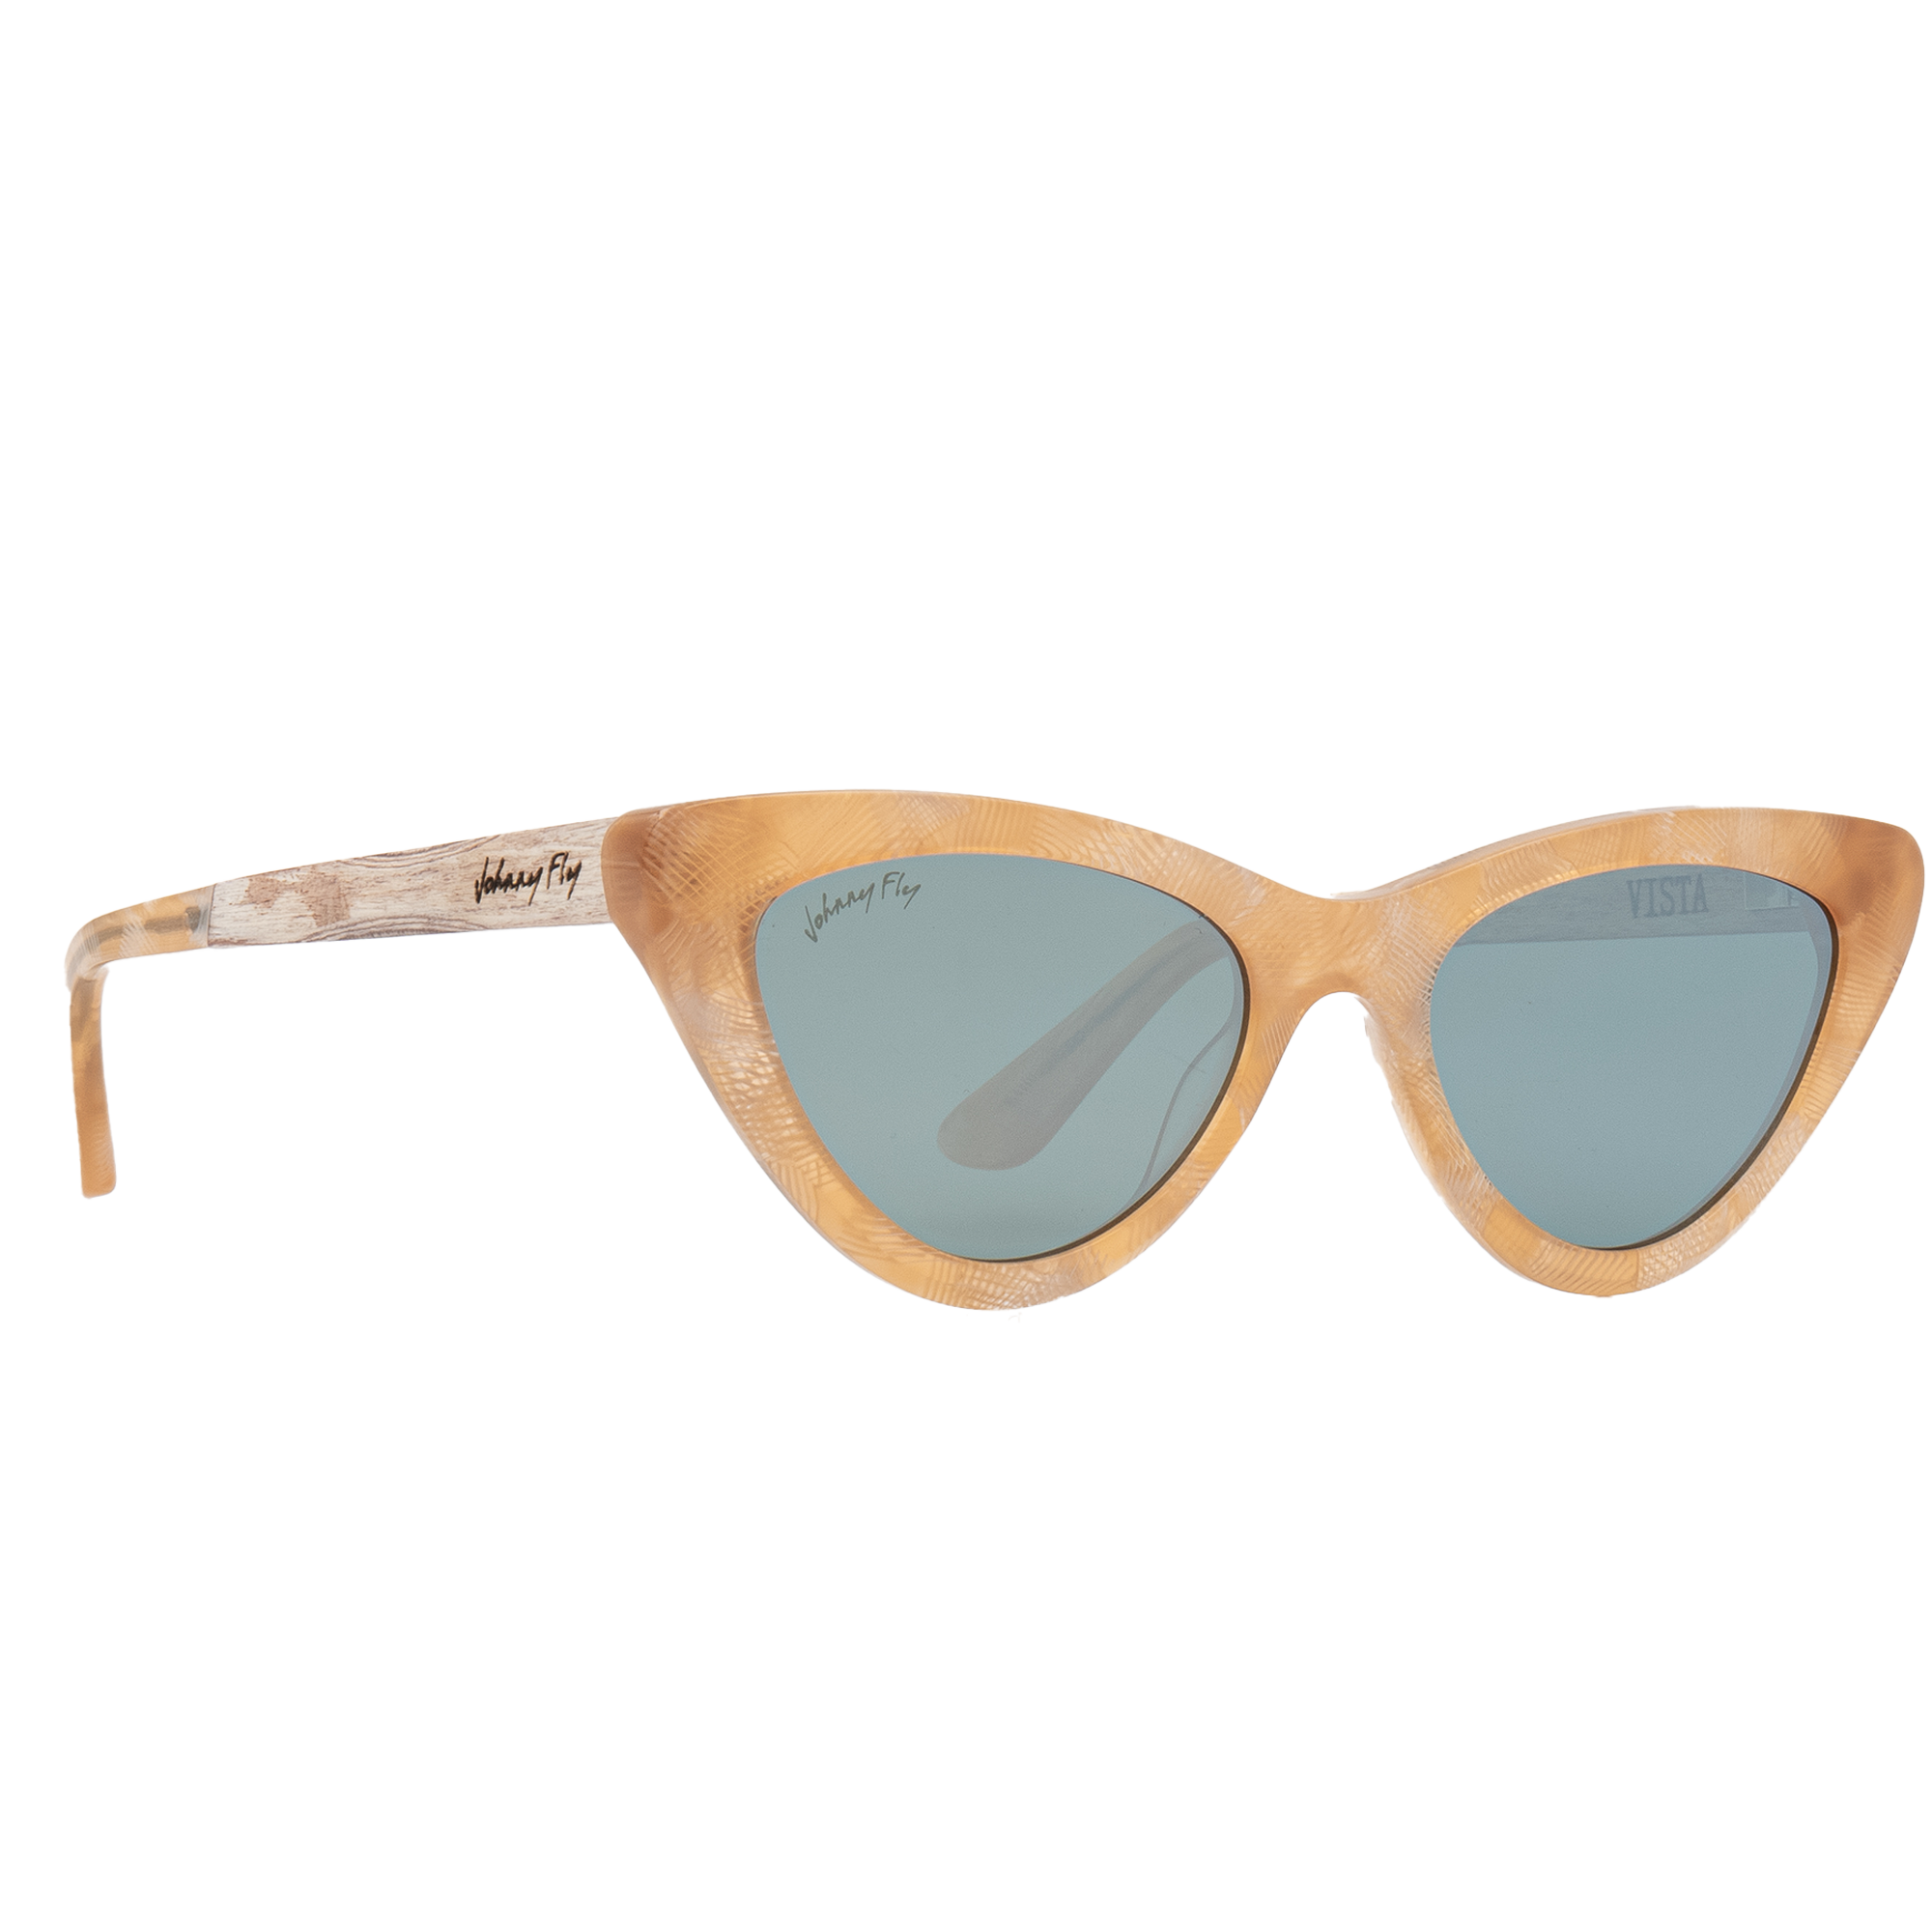 VISTA - Mimosa - Sunglasses - Johnny Fly Eyewear | 